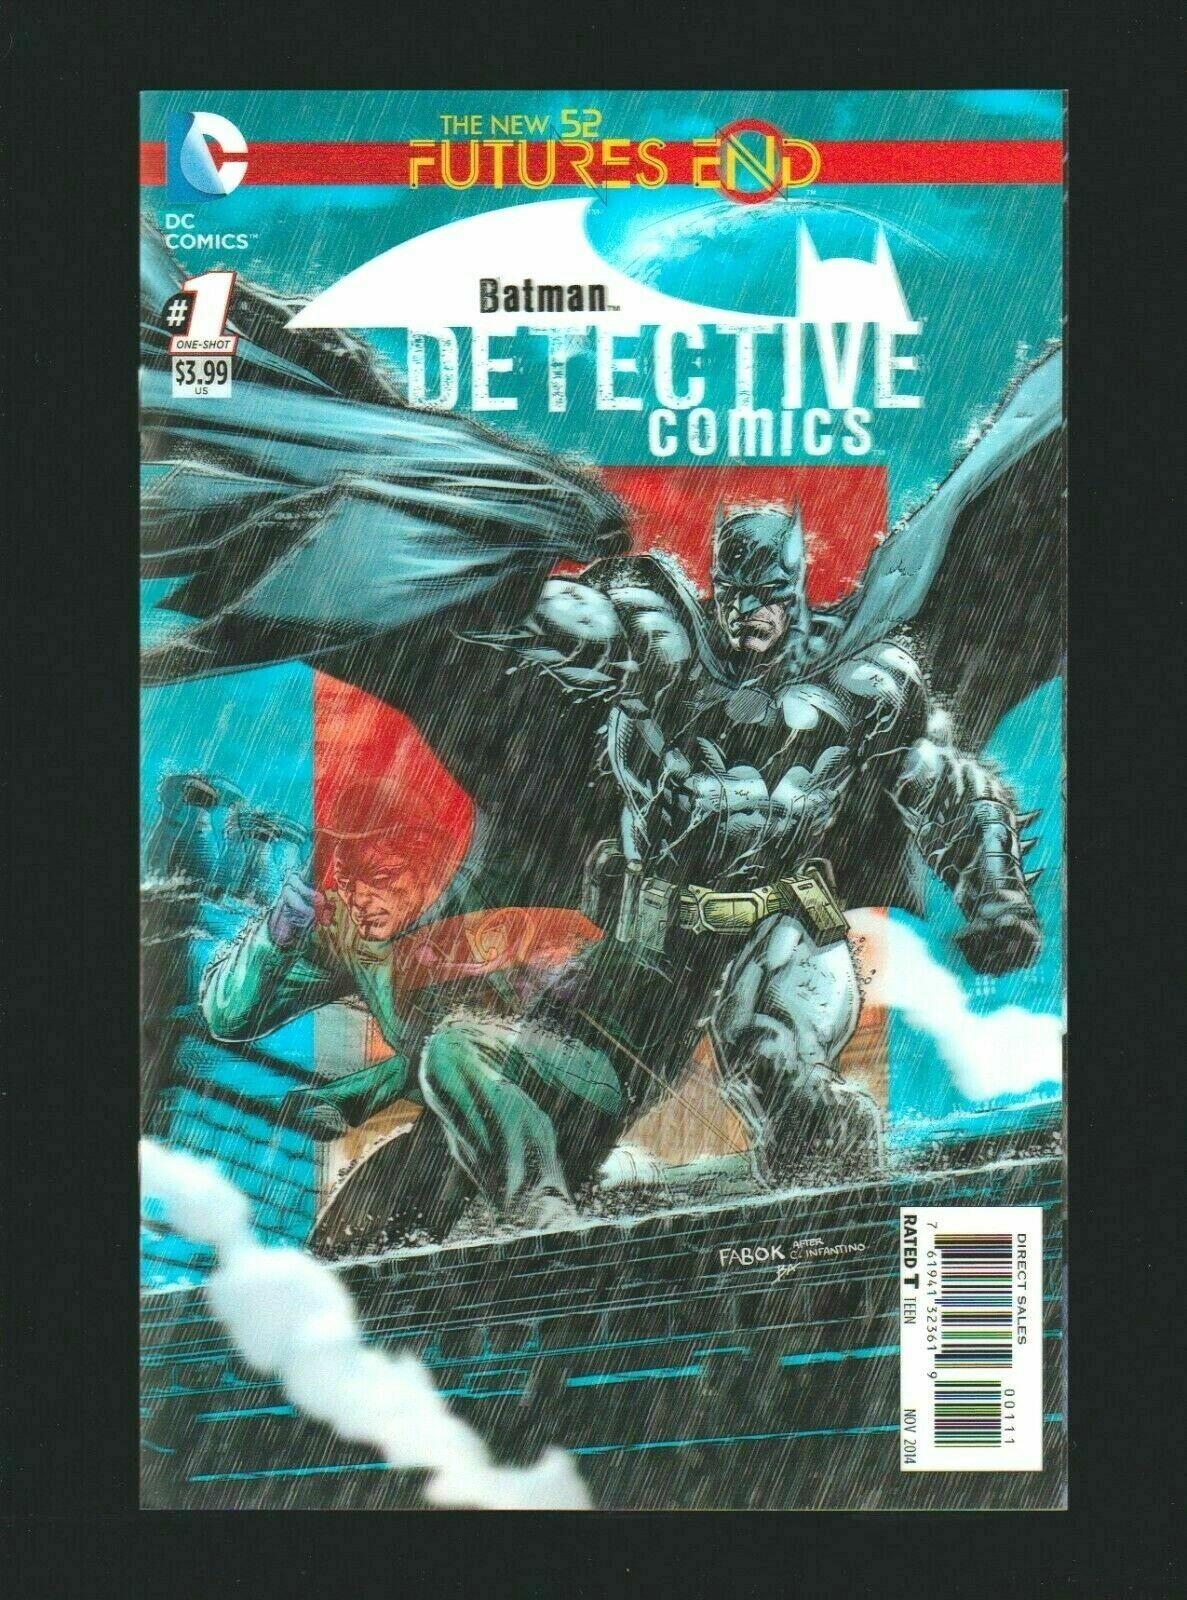 Detective Comics Batman #1 Plus TEN 3d Covers in the DC New 52 Future's END  NM | Comic Books - Modern Age, DC Comics, Batman, Superhero / HipComic